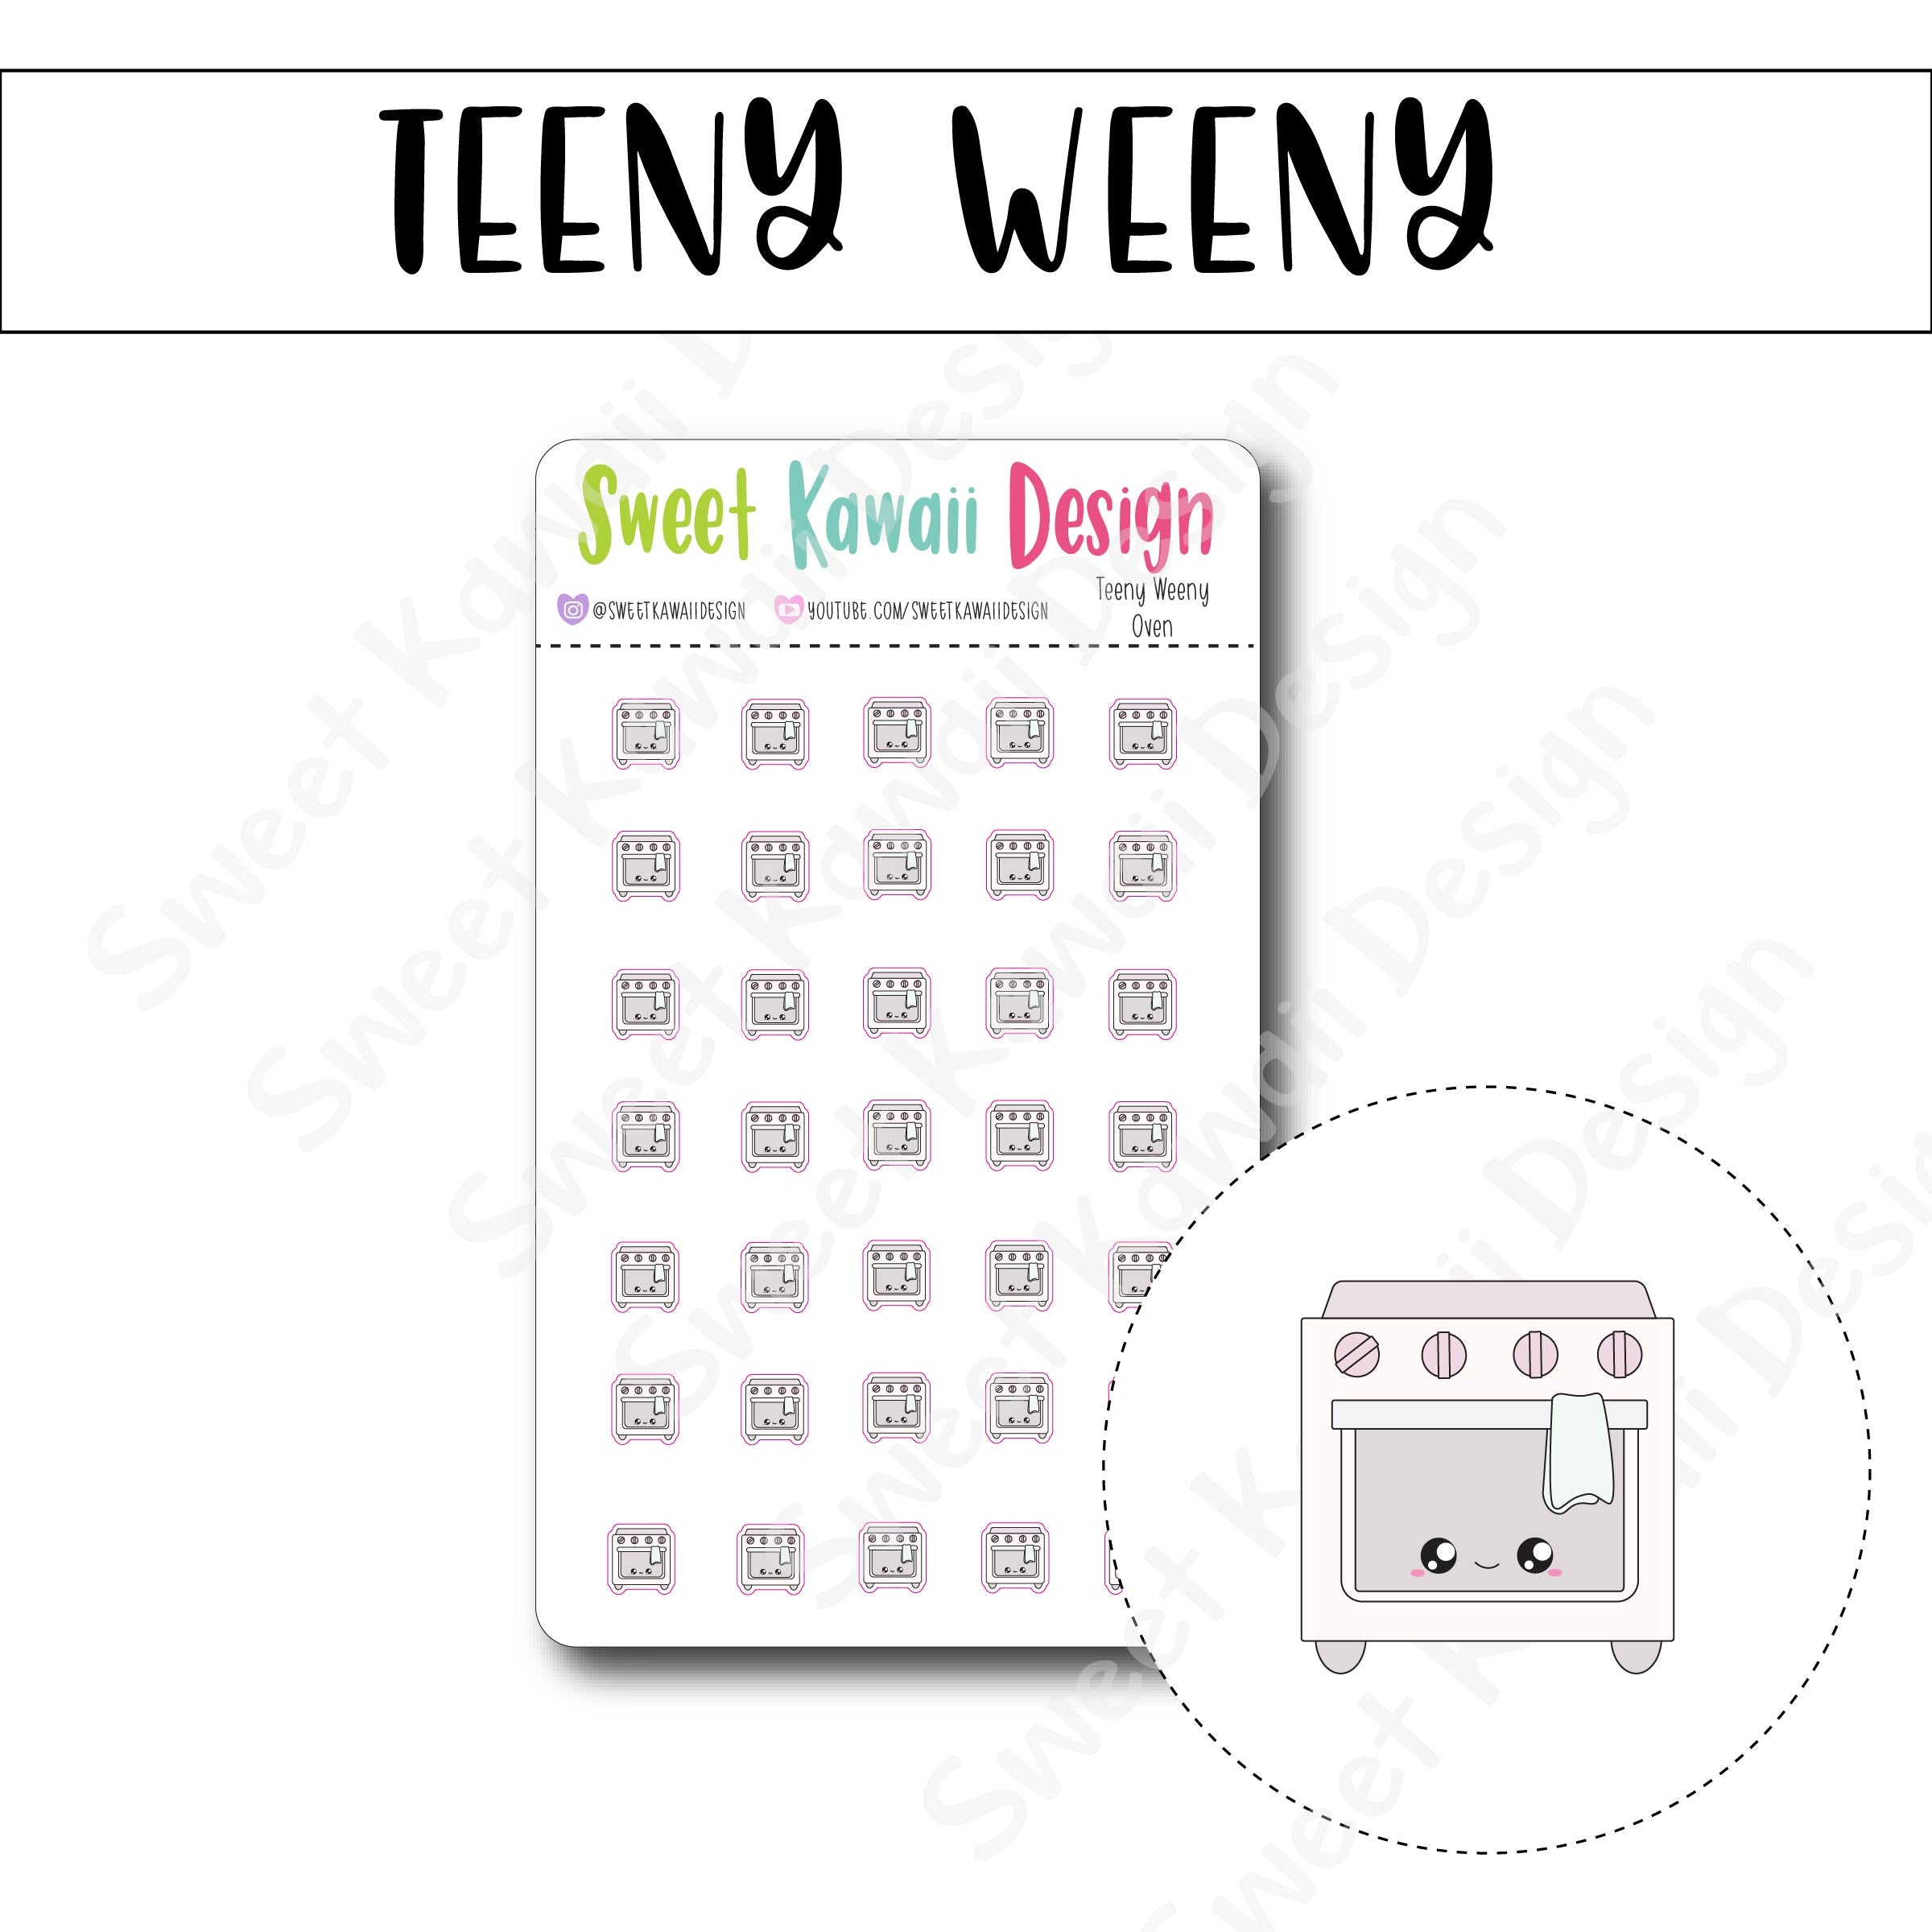 Teeny Weeny Oven Stickers